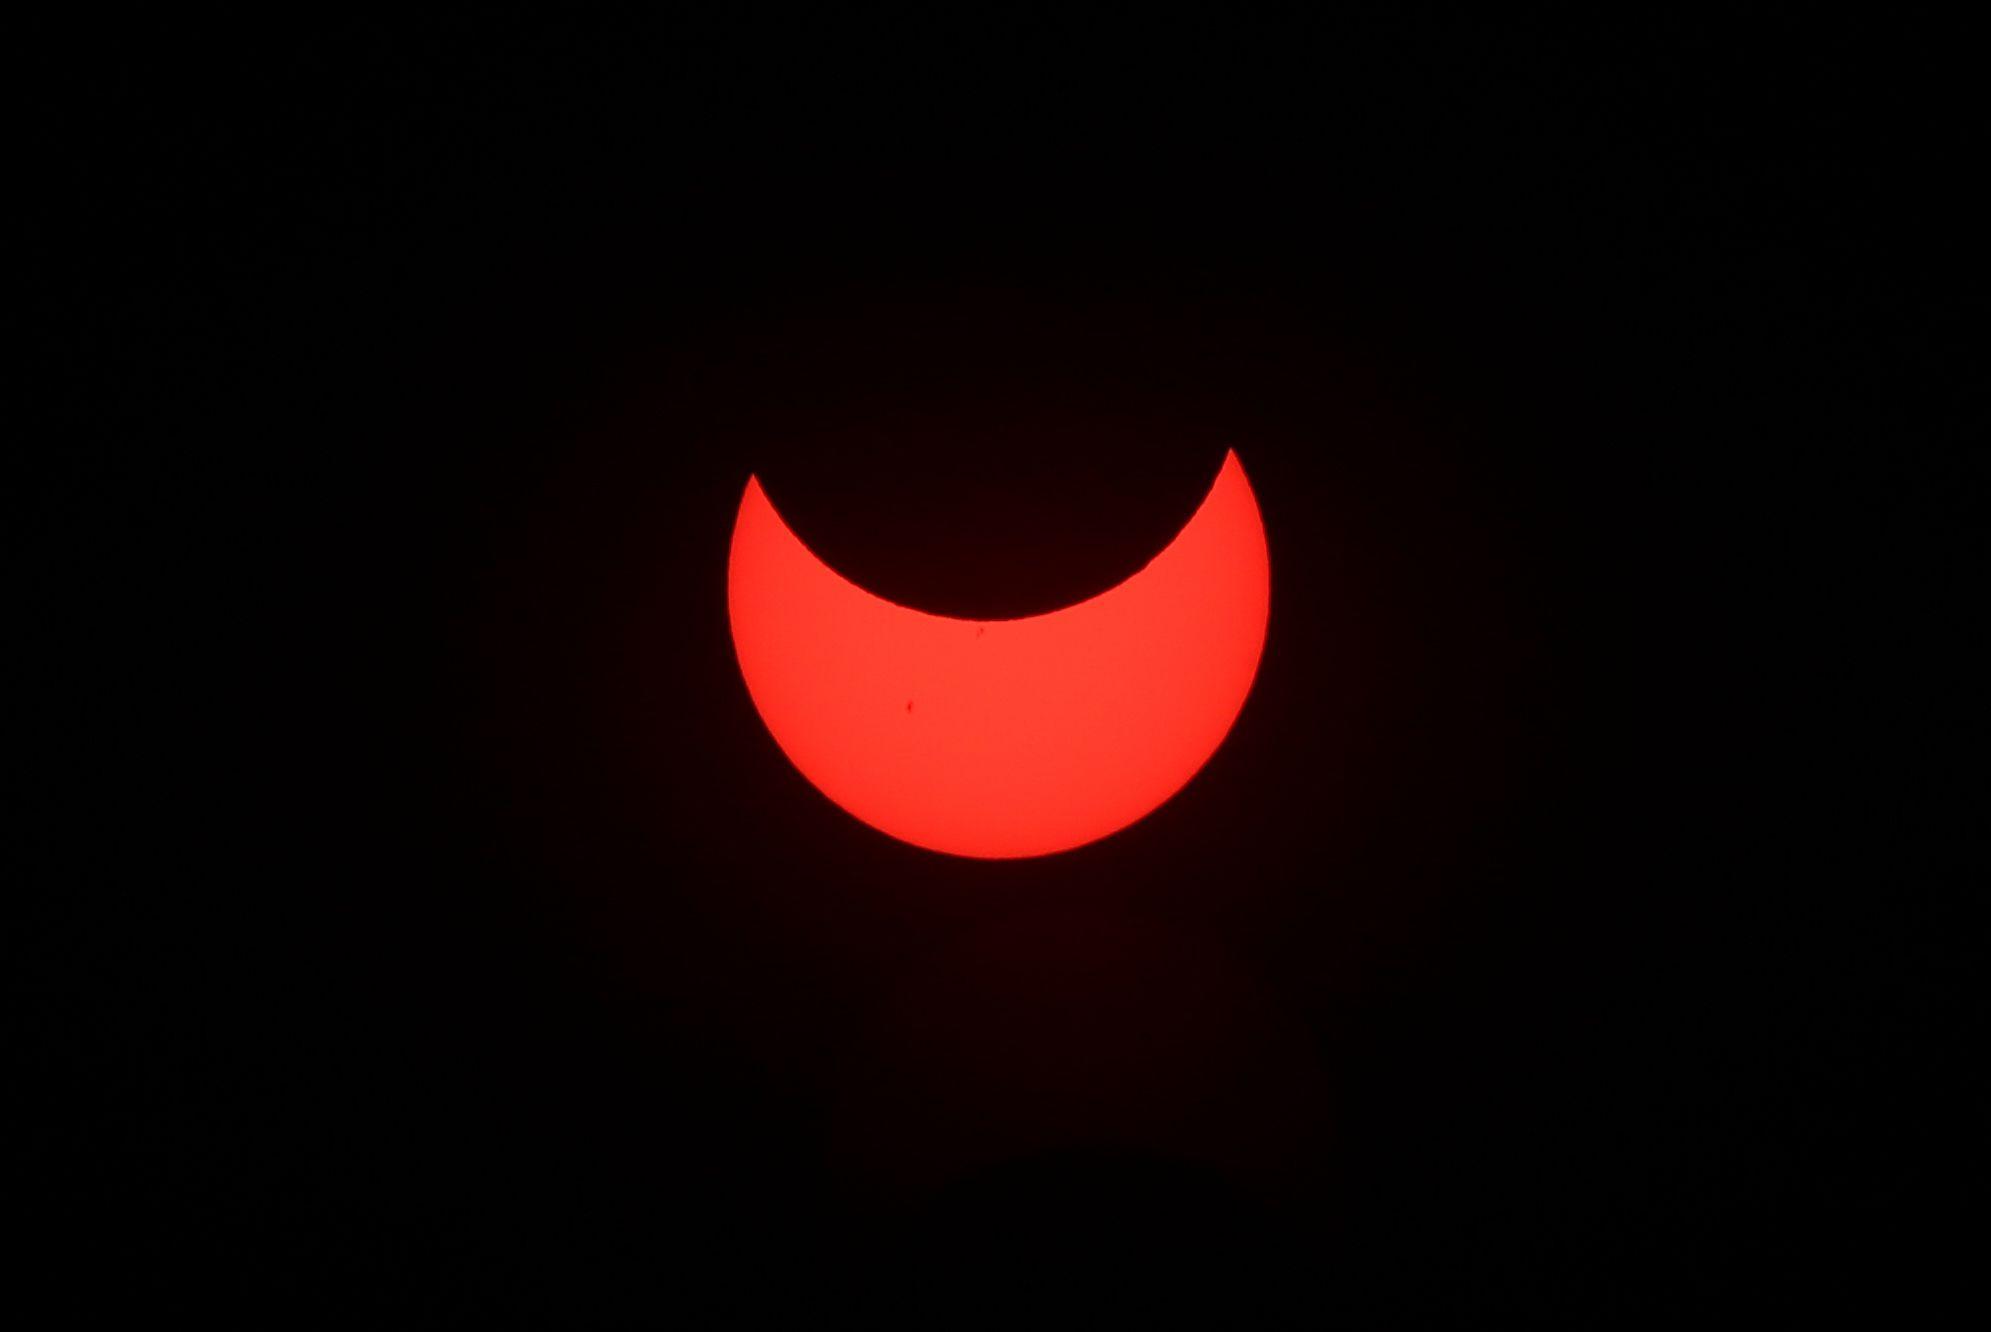 Vista del eclipse desde Tegucigalpa, Honduras. 